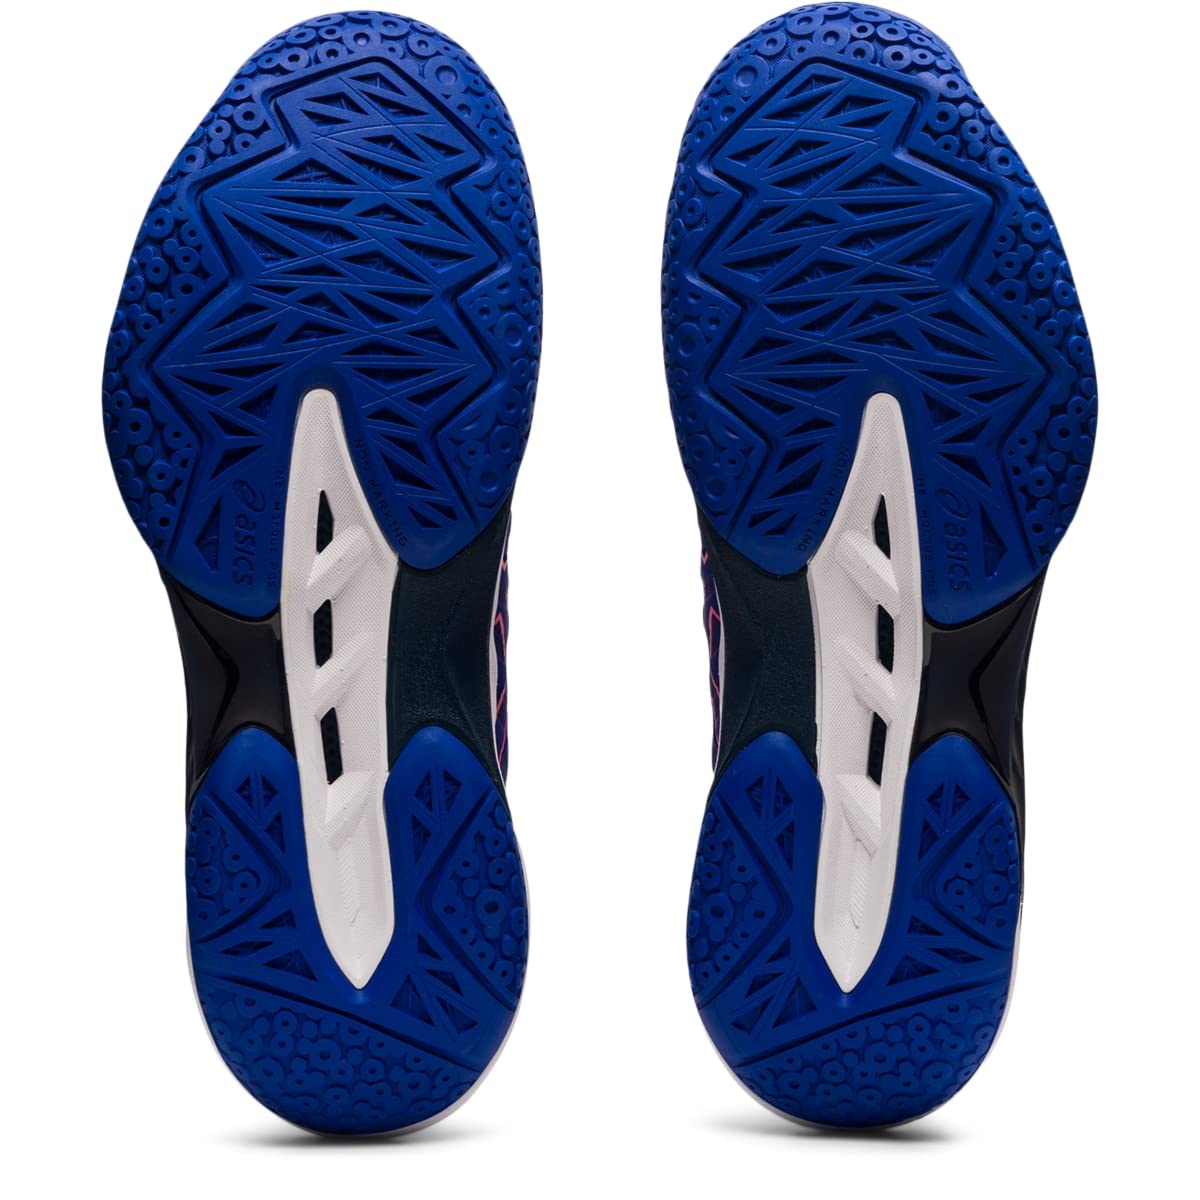 ASICS Women's Blast FlyteFoam 2 Handball Shoes, 8.5, Lapis Lazuli Blue/French Blue